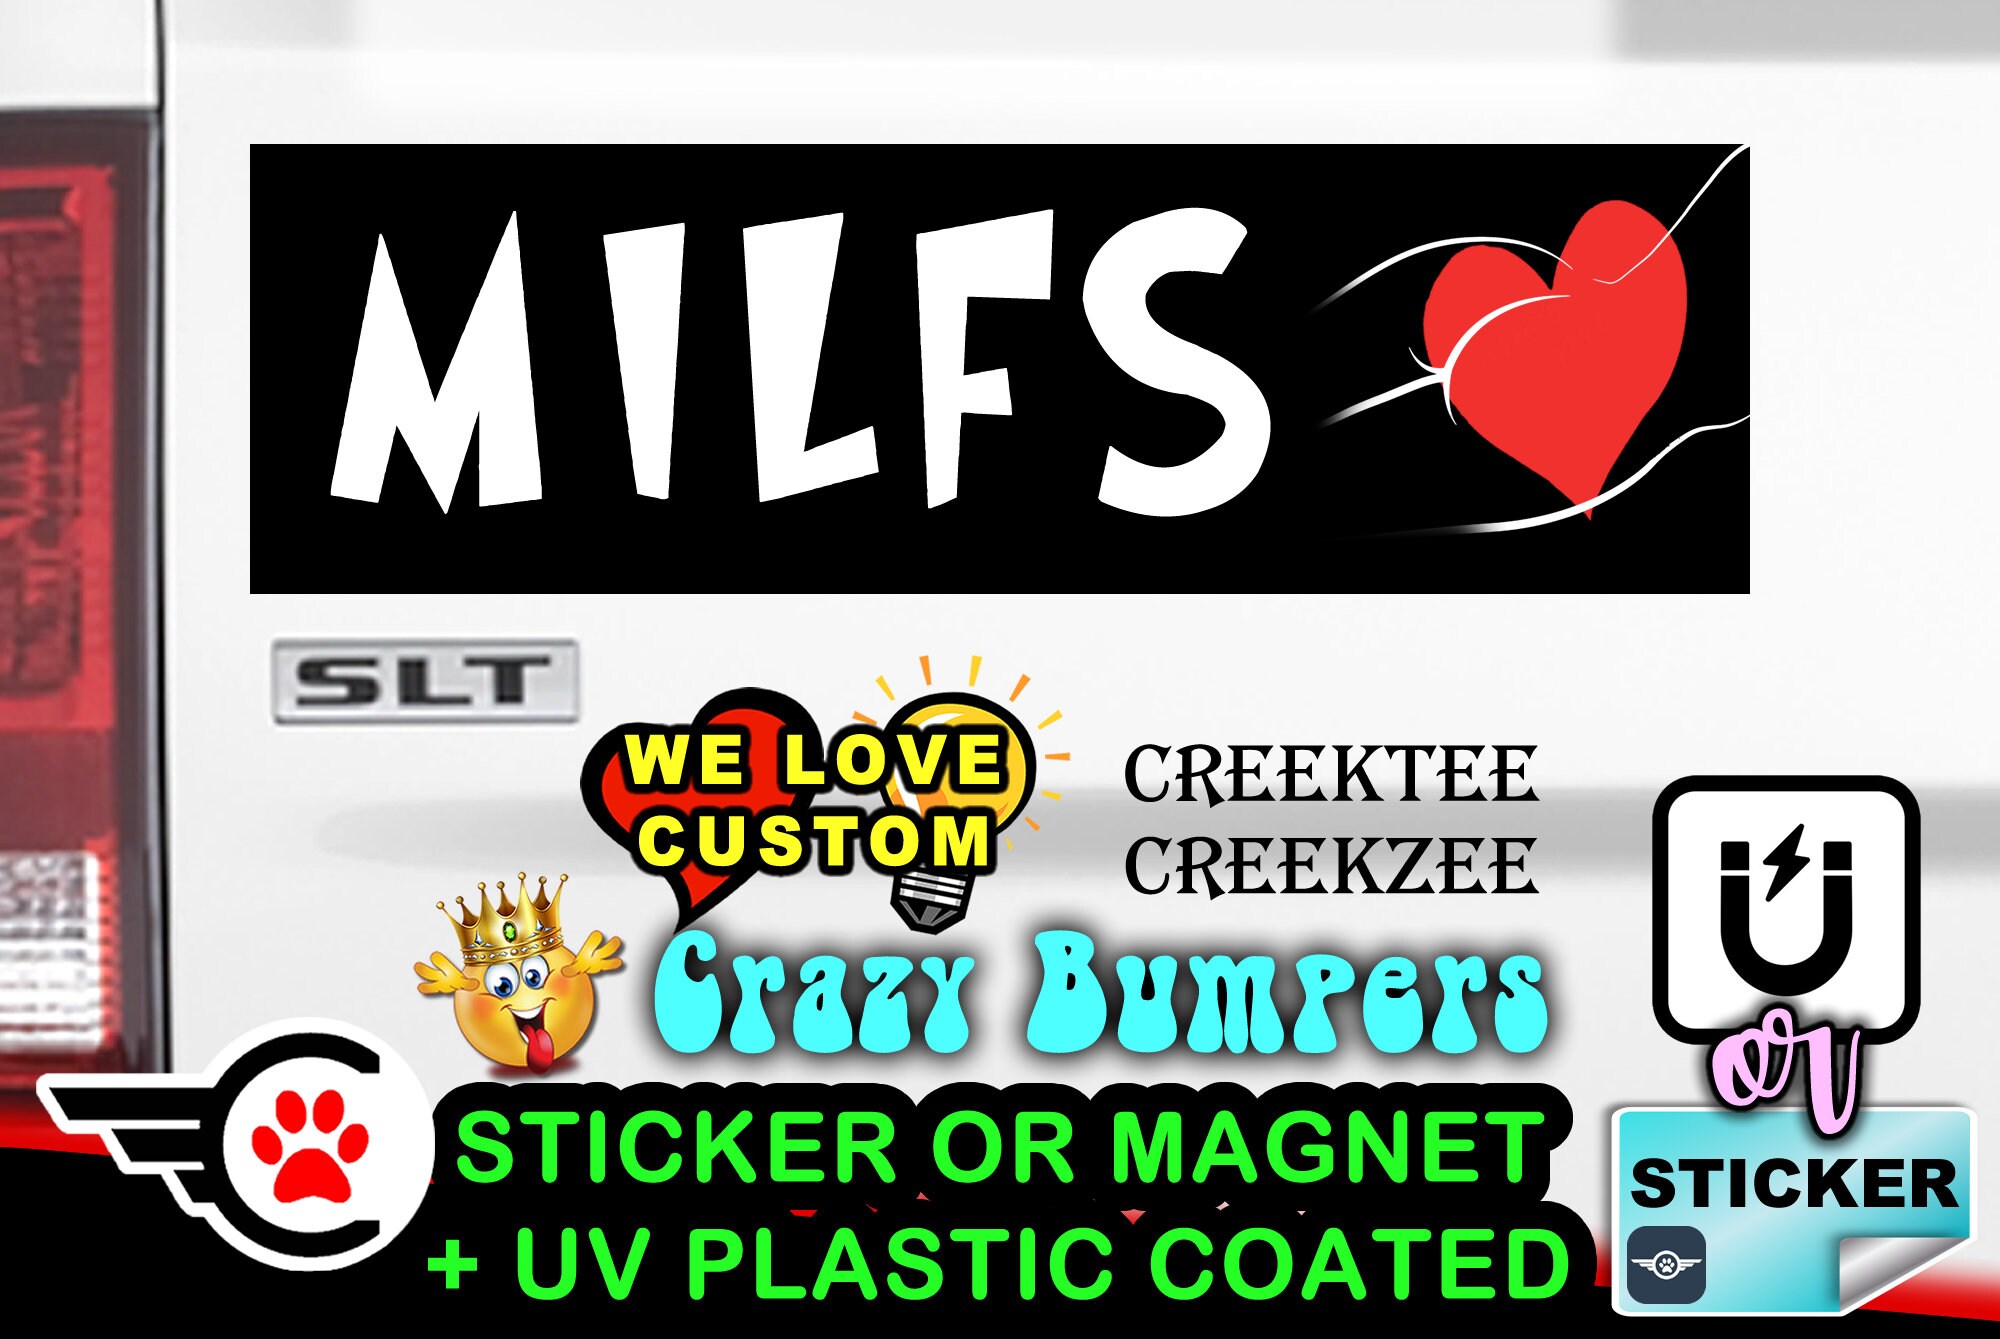 I Love Milfs white on black Bumper Sticker or Magnet in new sizes, 4